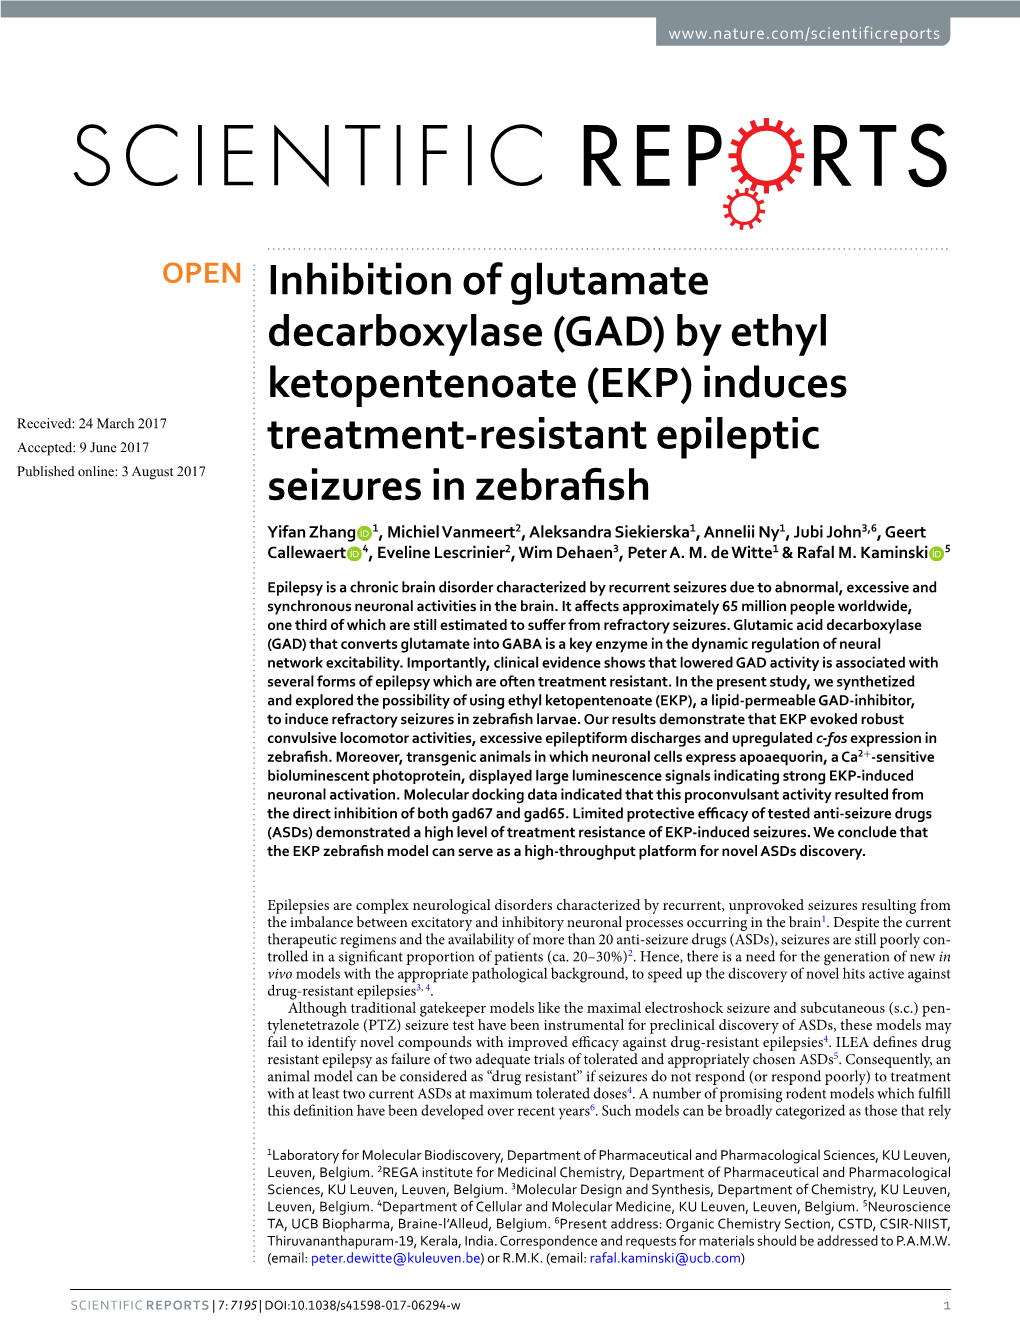 Inhibition of Glutamate Decarboxylase (GAD) by Ethyl Ketopentenoate (EKP)